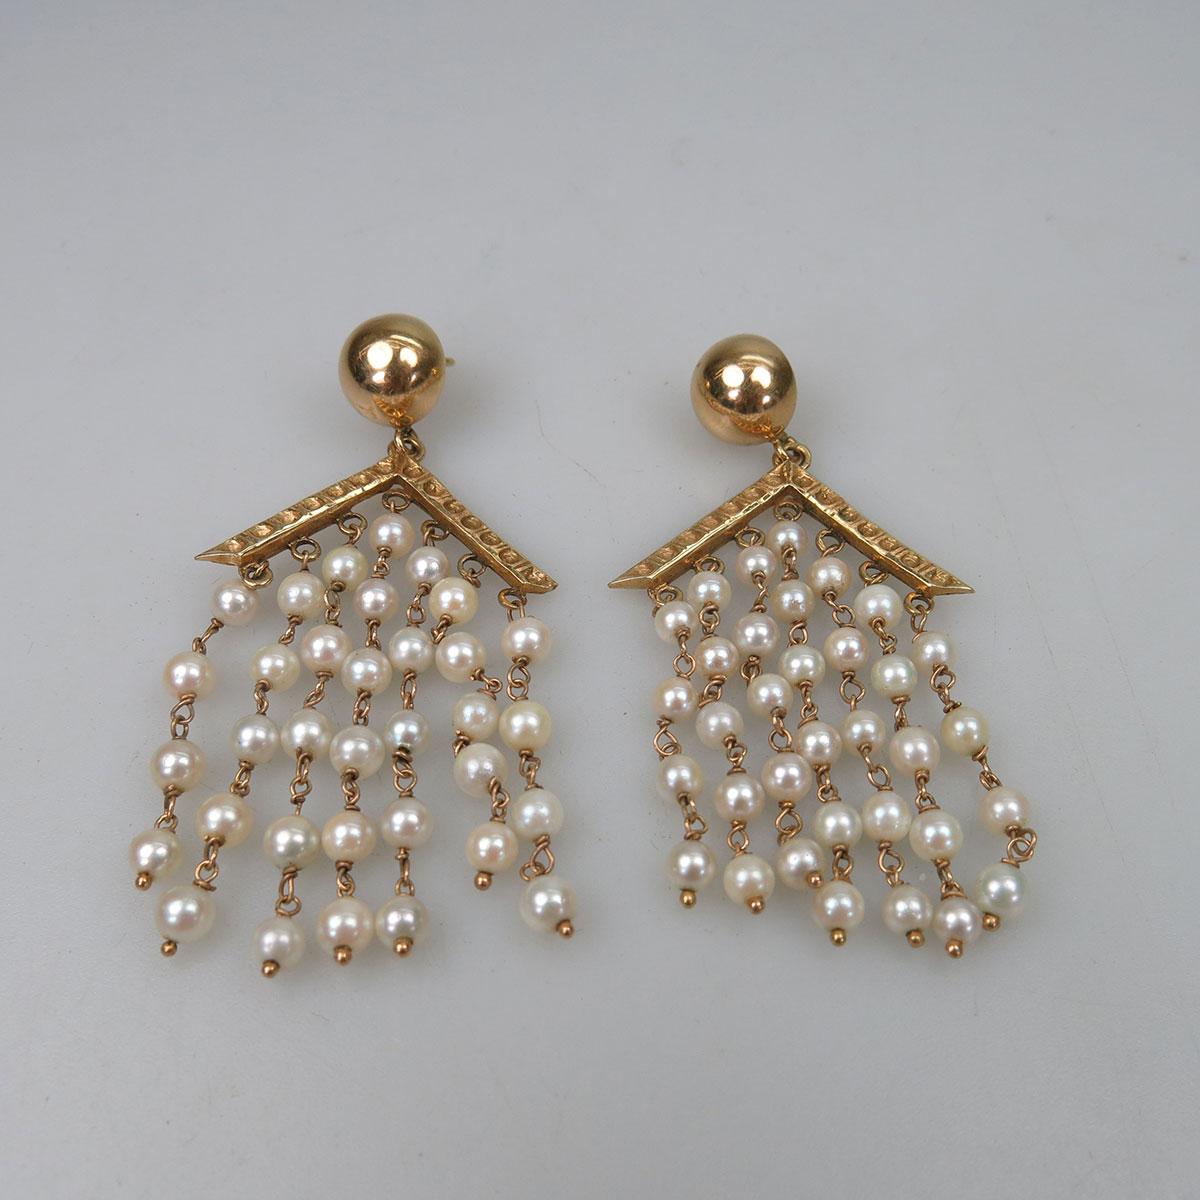 Pair Of 18k Yellow Gold Chandelier Earrings